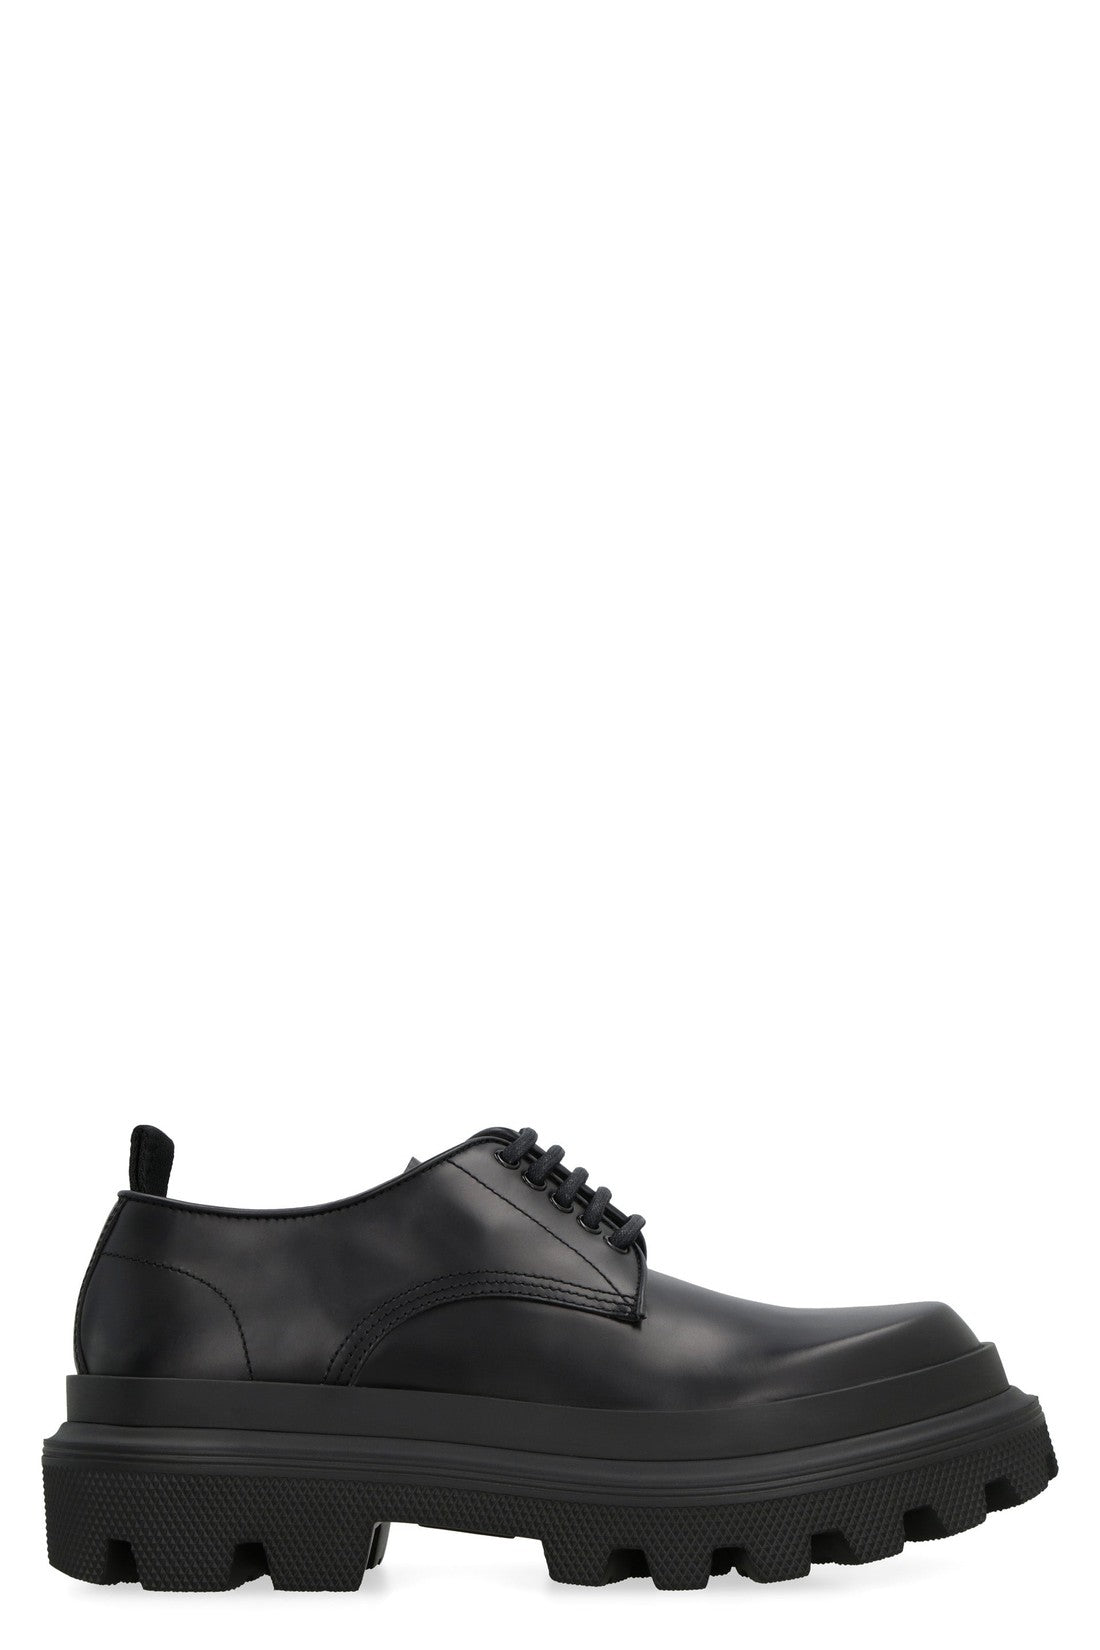 Dolce & Gabbana-OUTLET-SALE-Derby leather shoes-ARCHIVIST